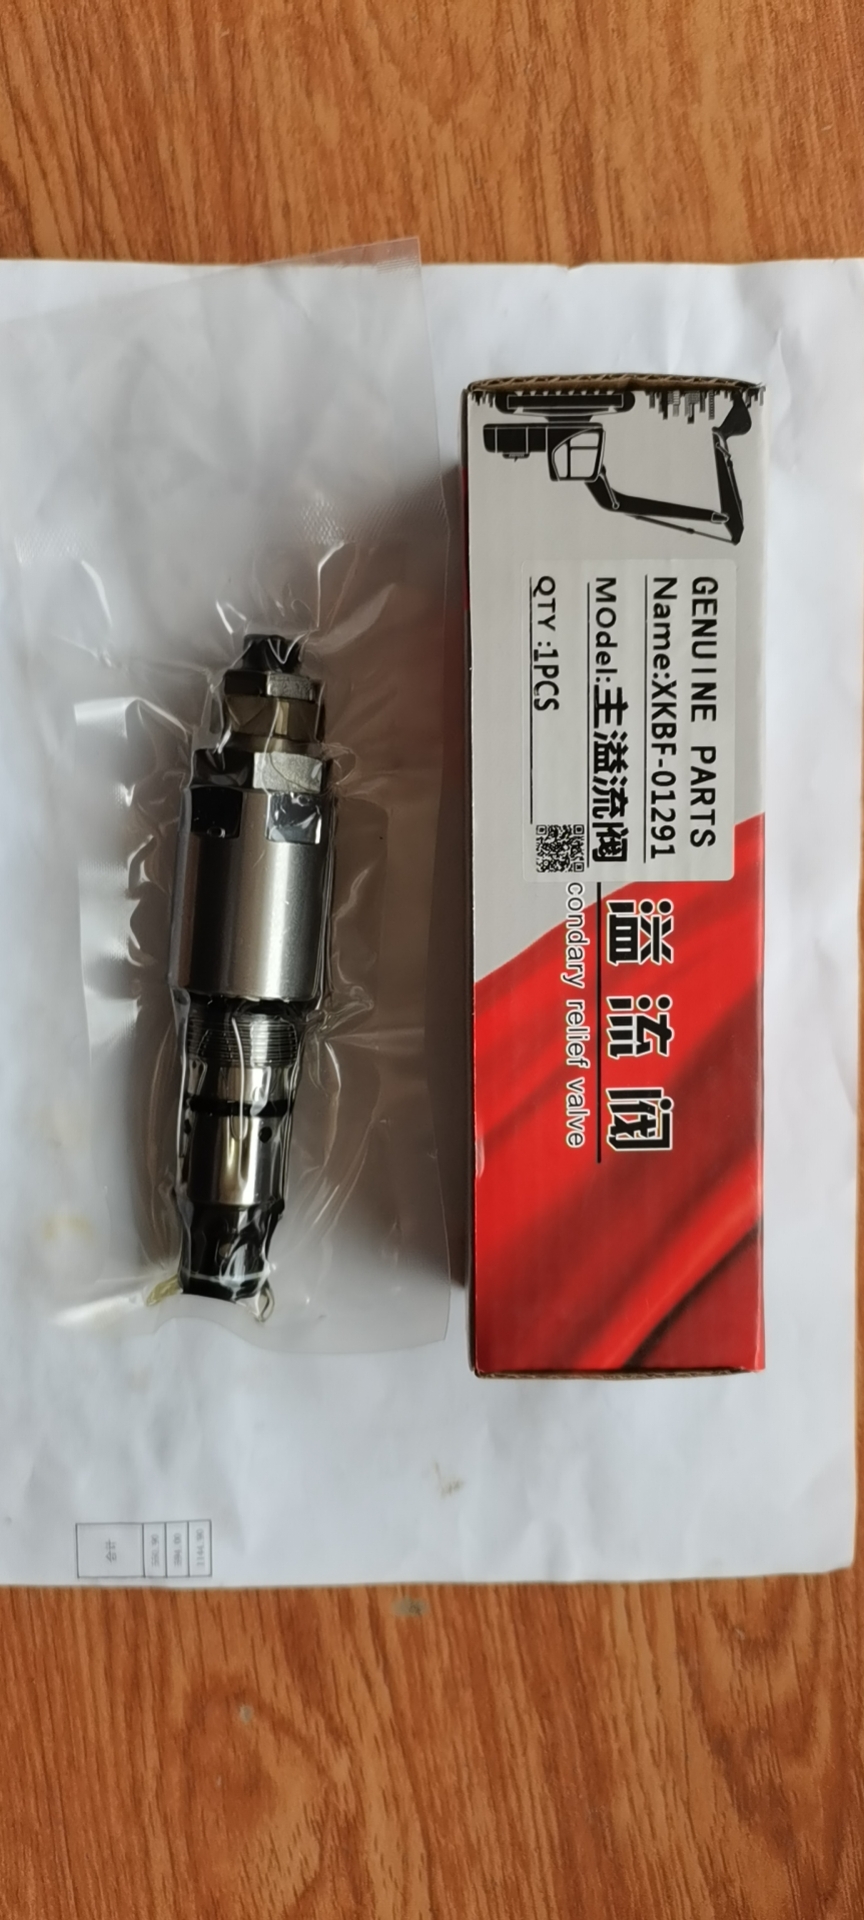 XKBF-01291 Main relief valve